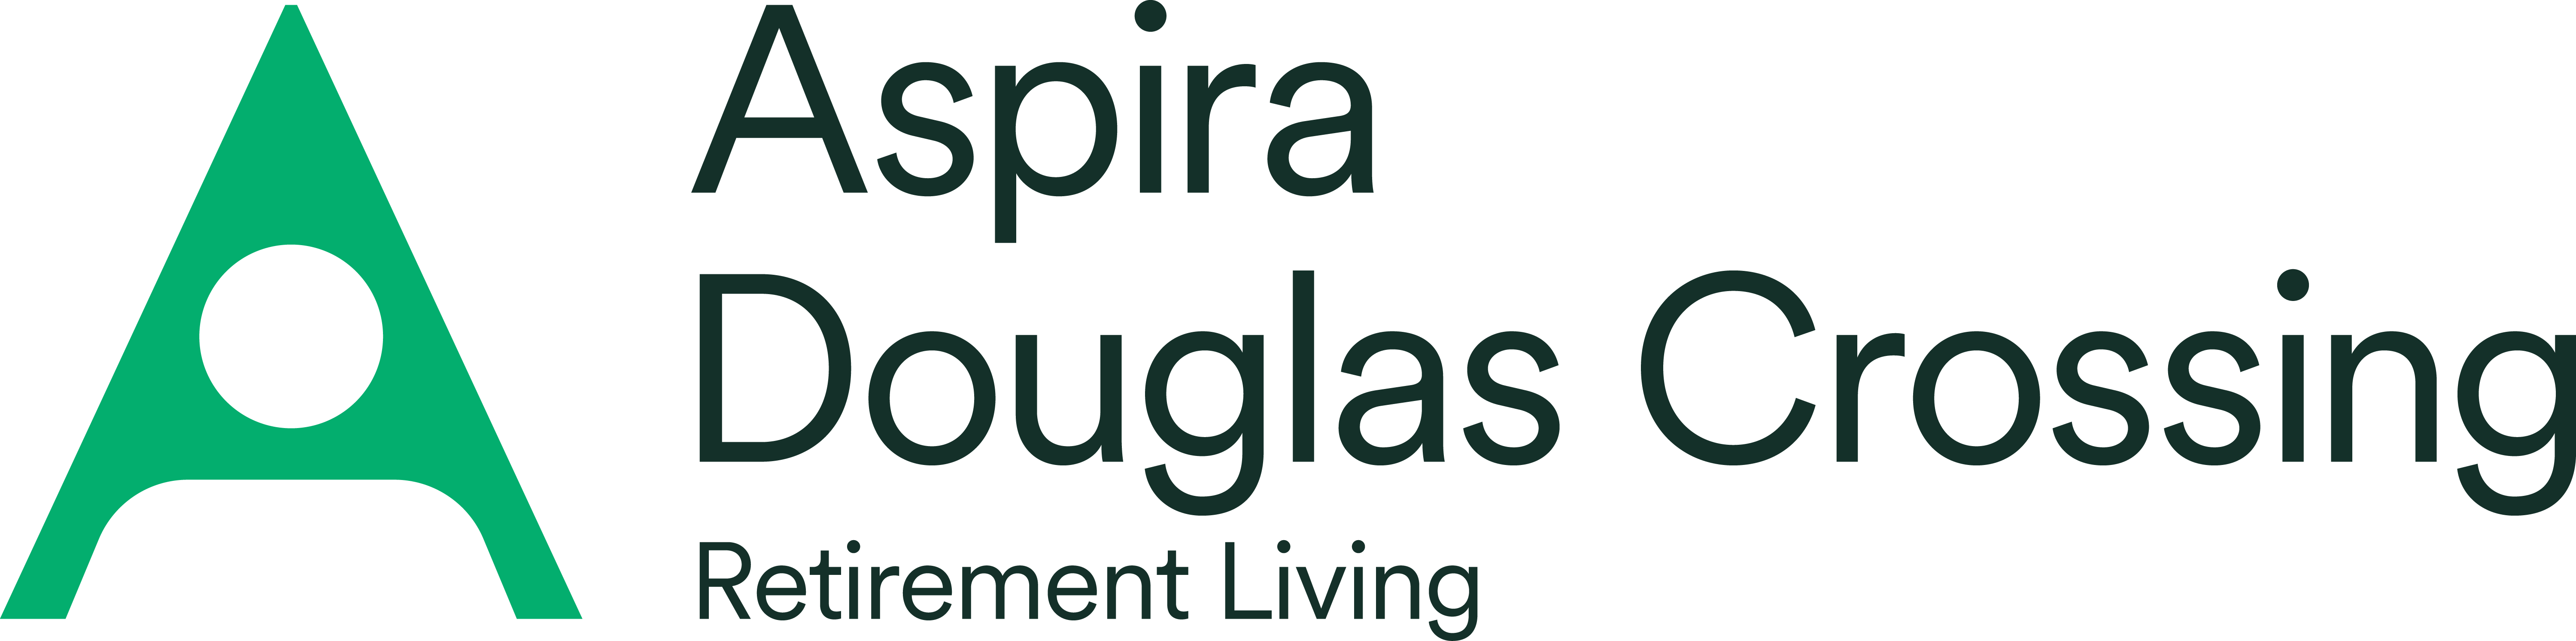 Aspira-logo-Douglas_Crossing